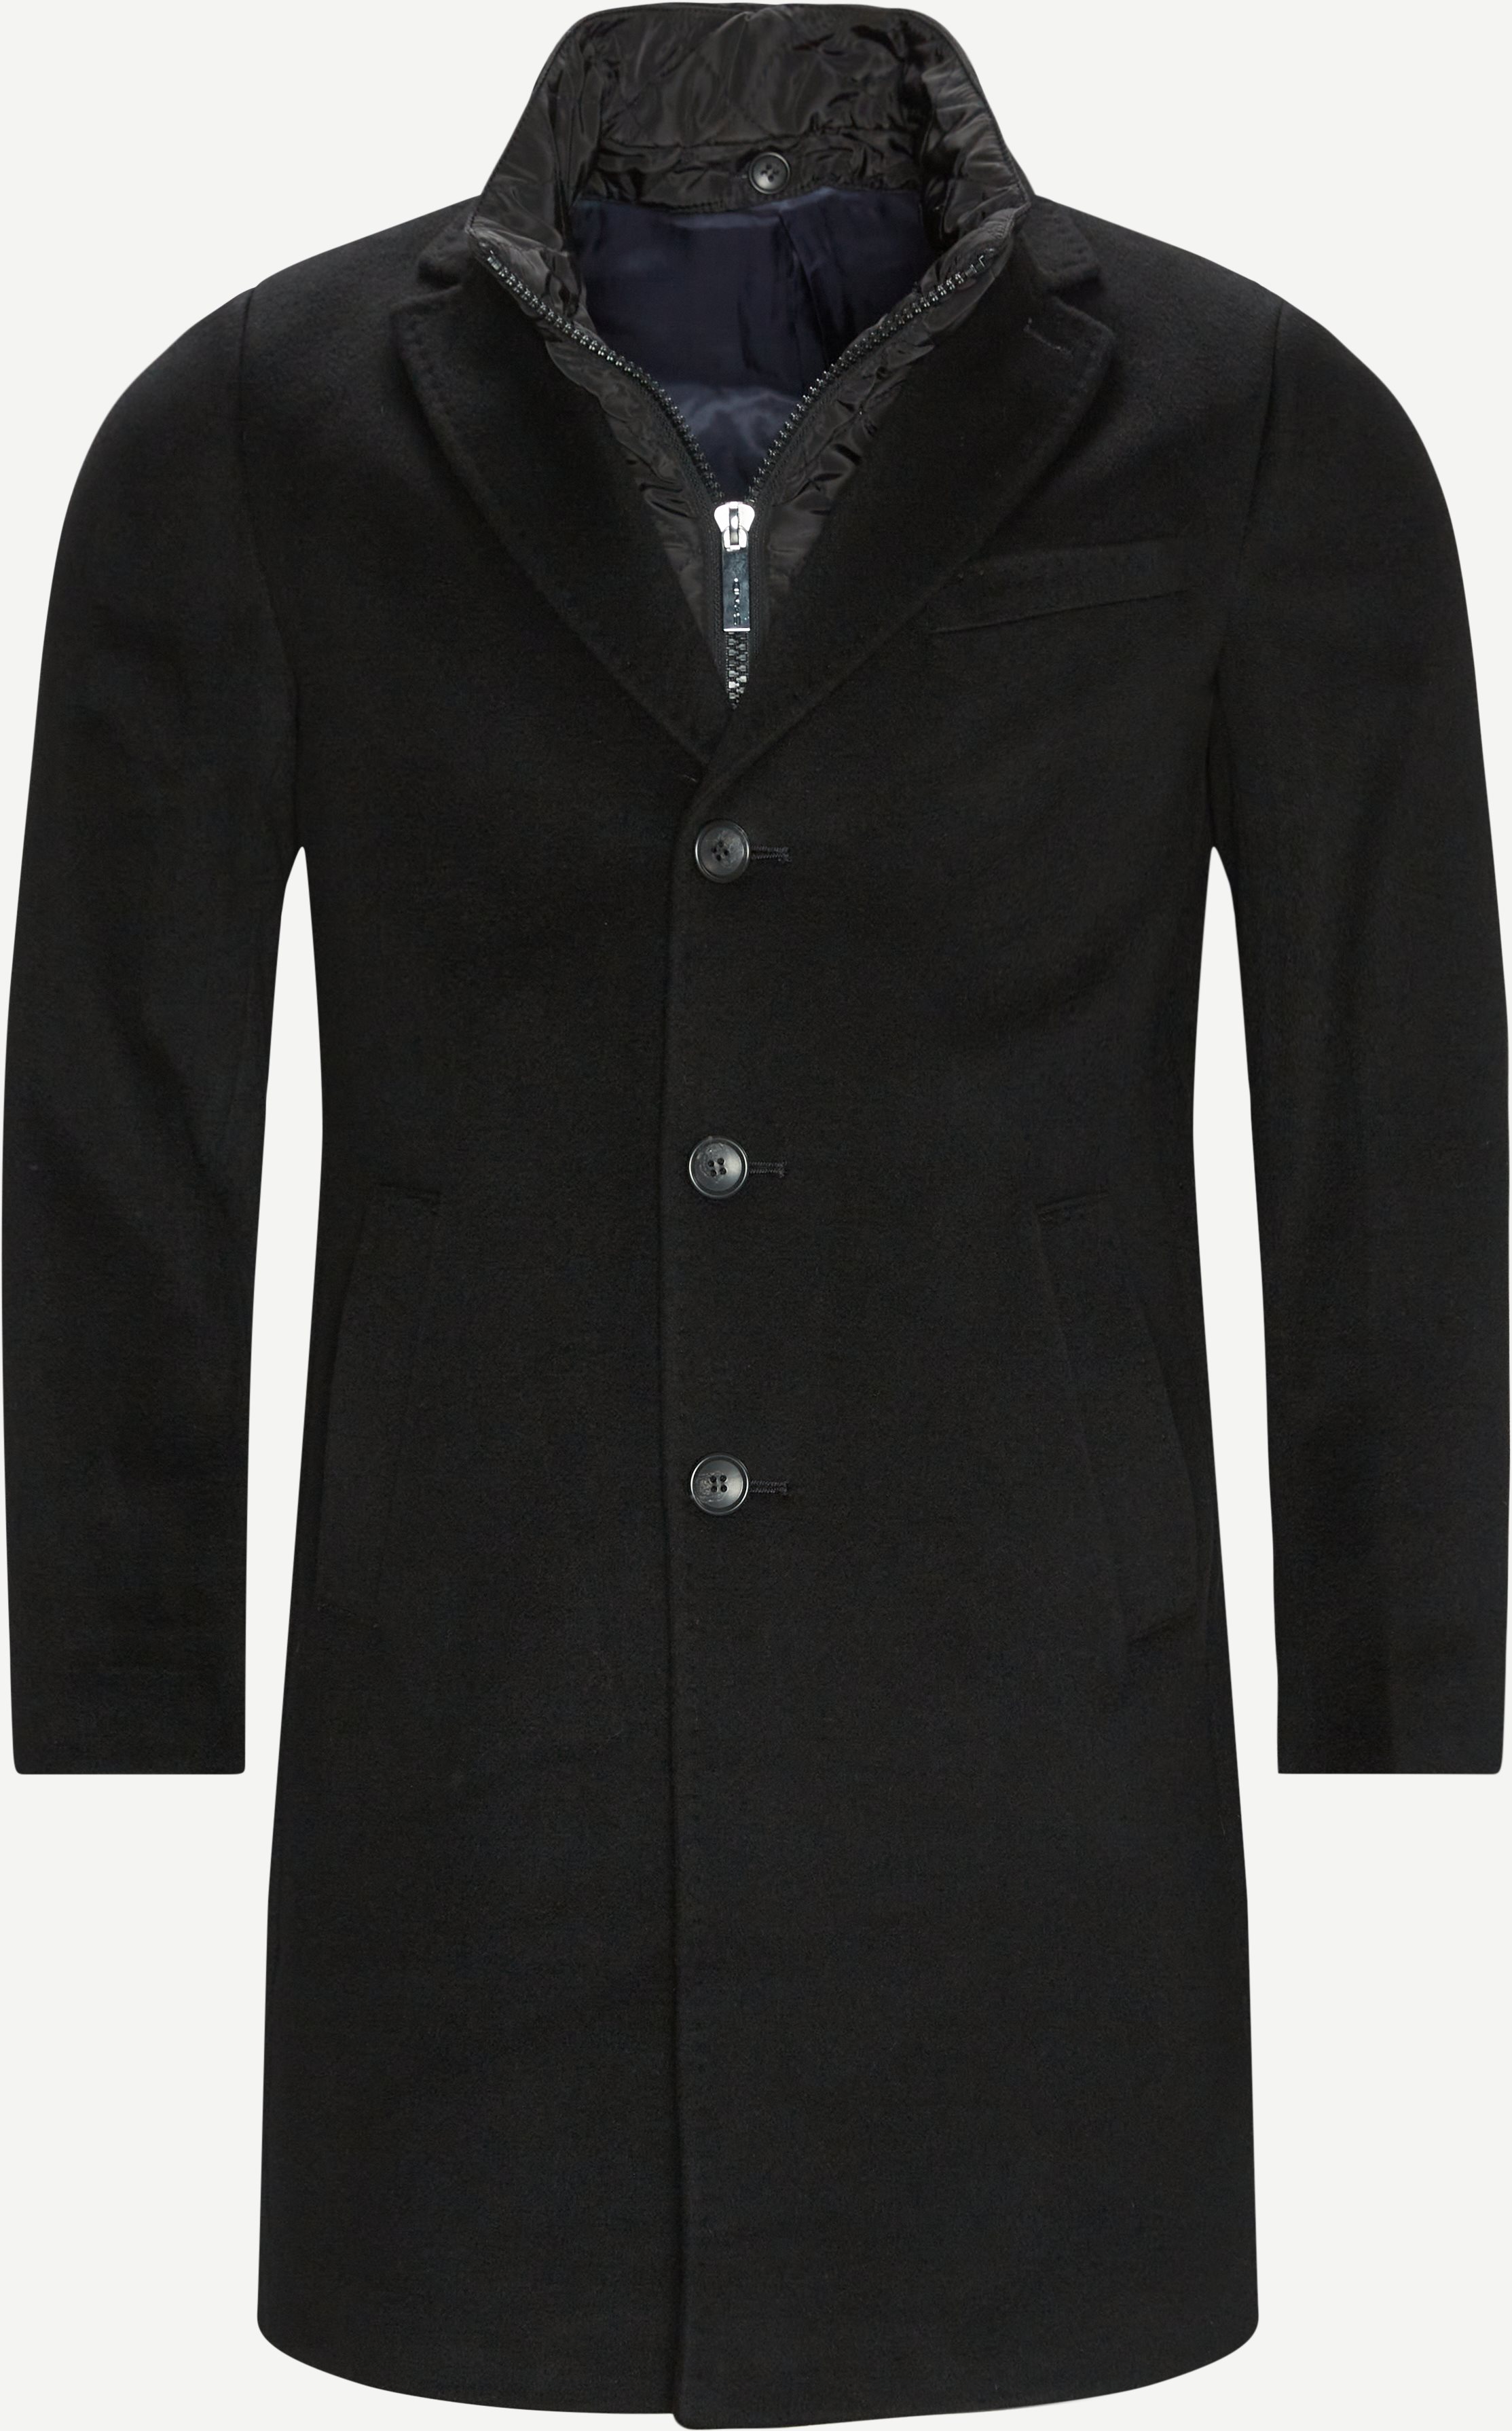 Sultan Tech Coat - Jackets - Regular fit - Black